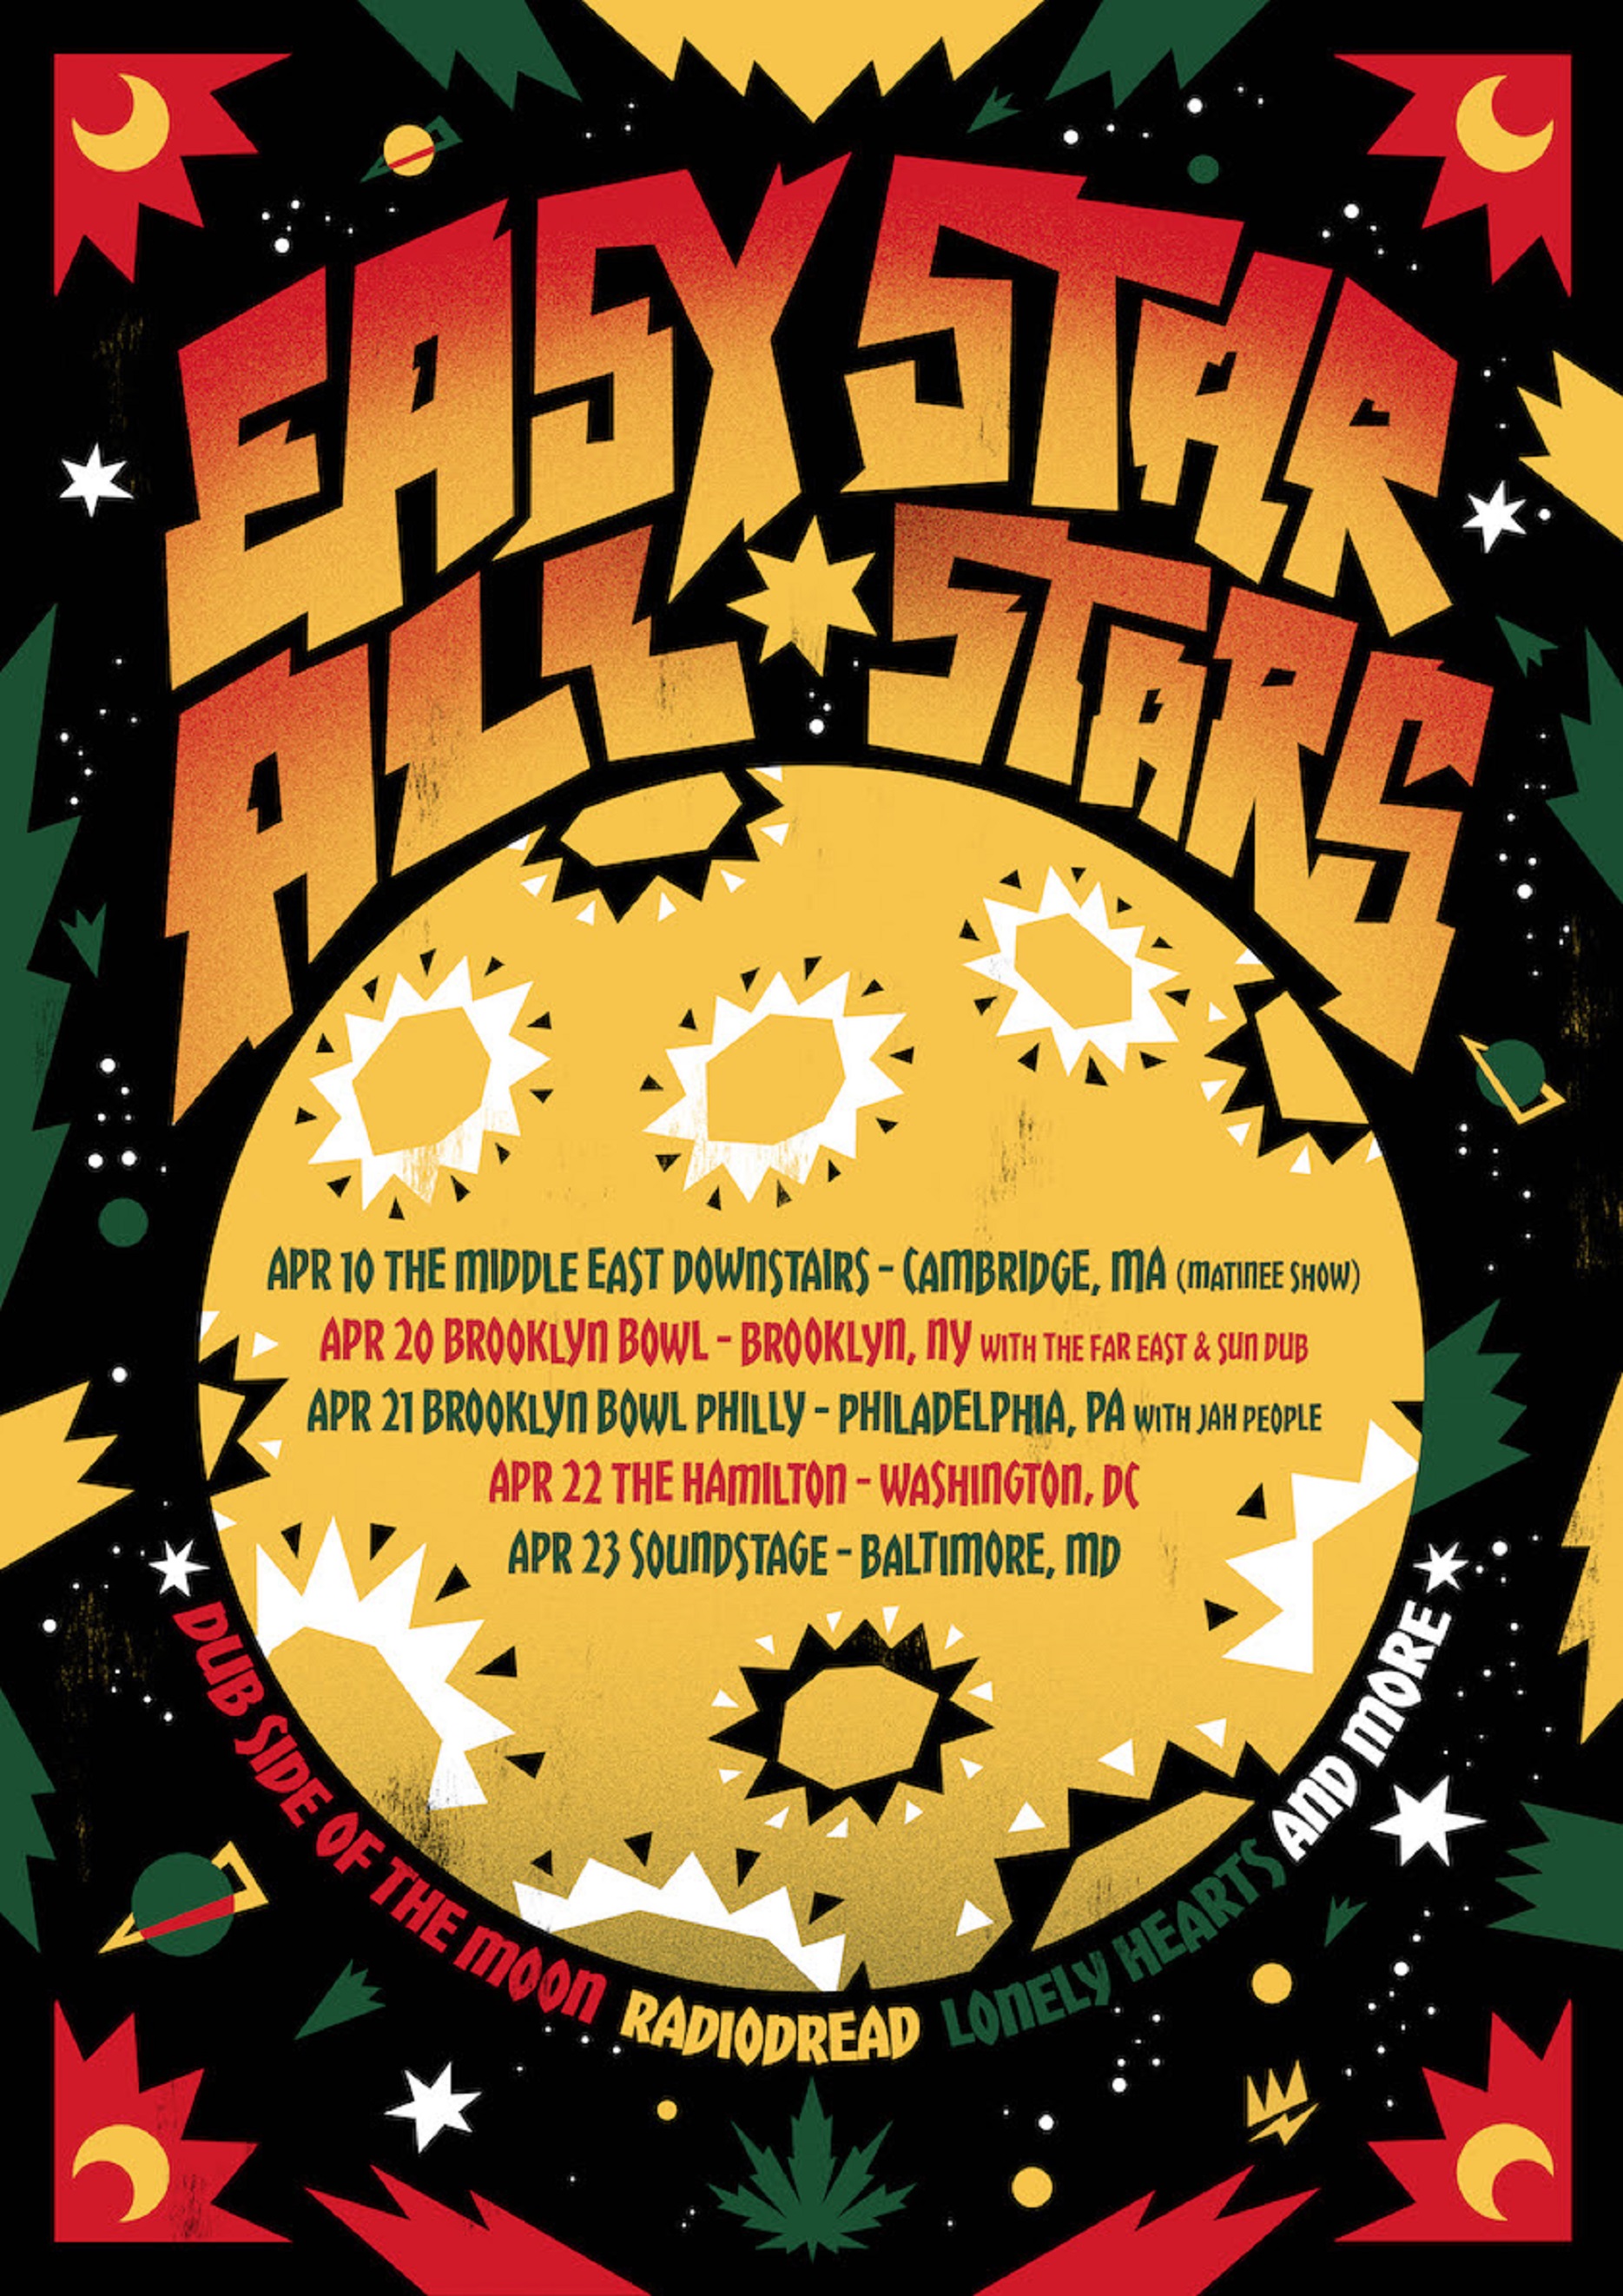 Easy Star All Stars Announce Spring 2022 Tour